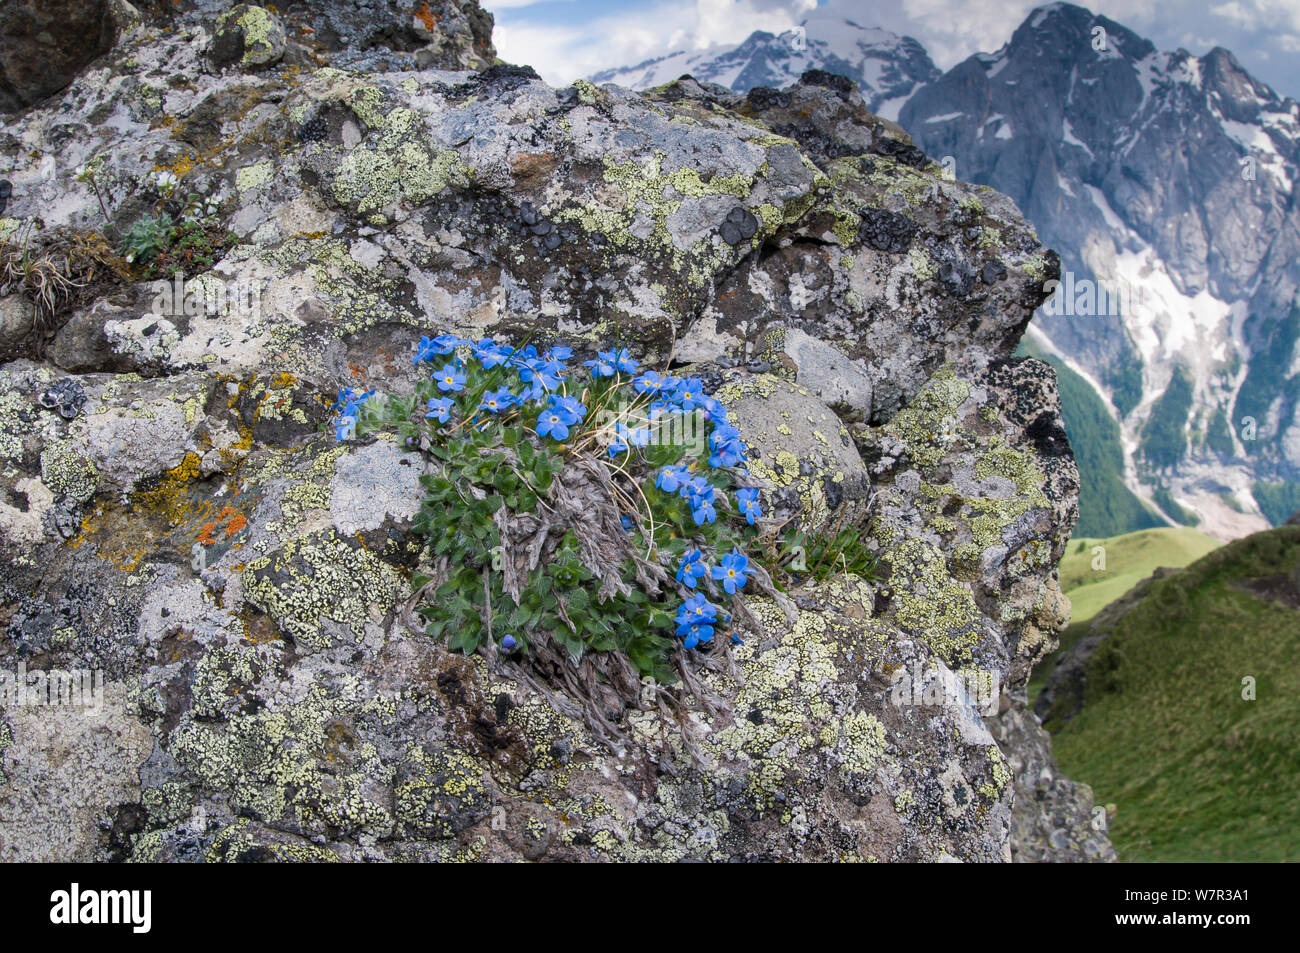 King of the Alps (Eritrichium nanum) in flower on a granite outcrop above the Pordoi pass, Sella, Dolomites, Italy, July Stock Photo